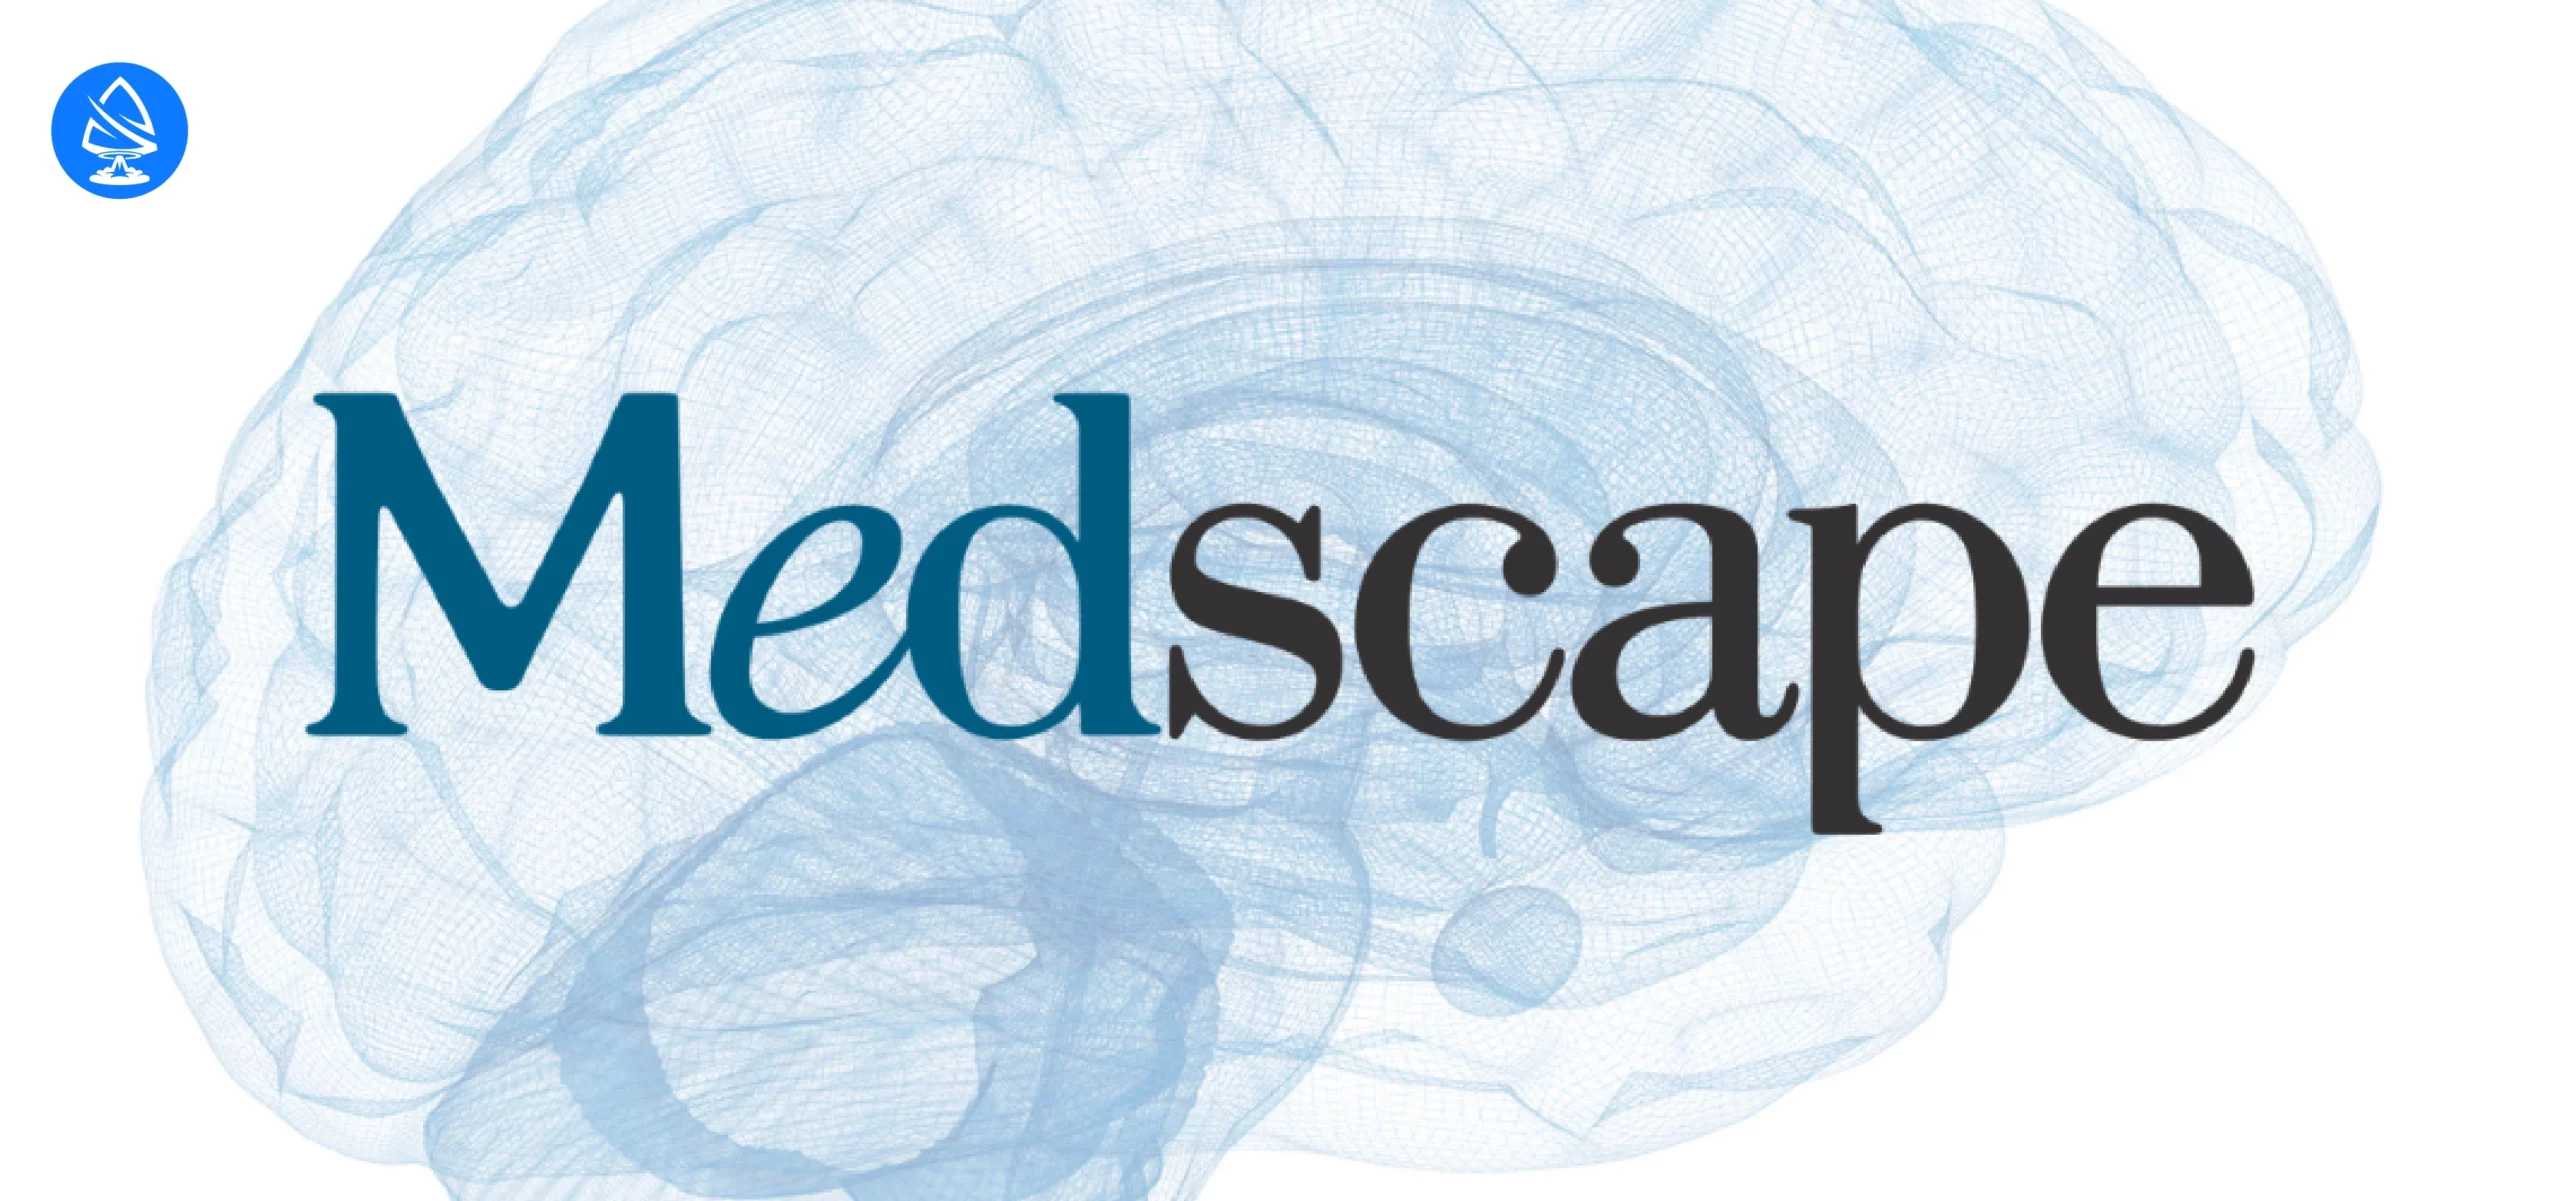 Case Study 2: MedsScape